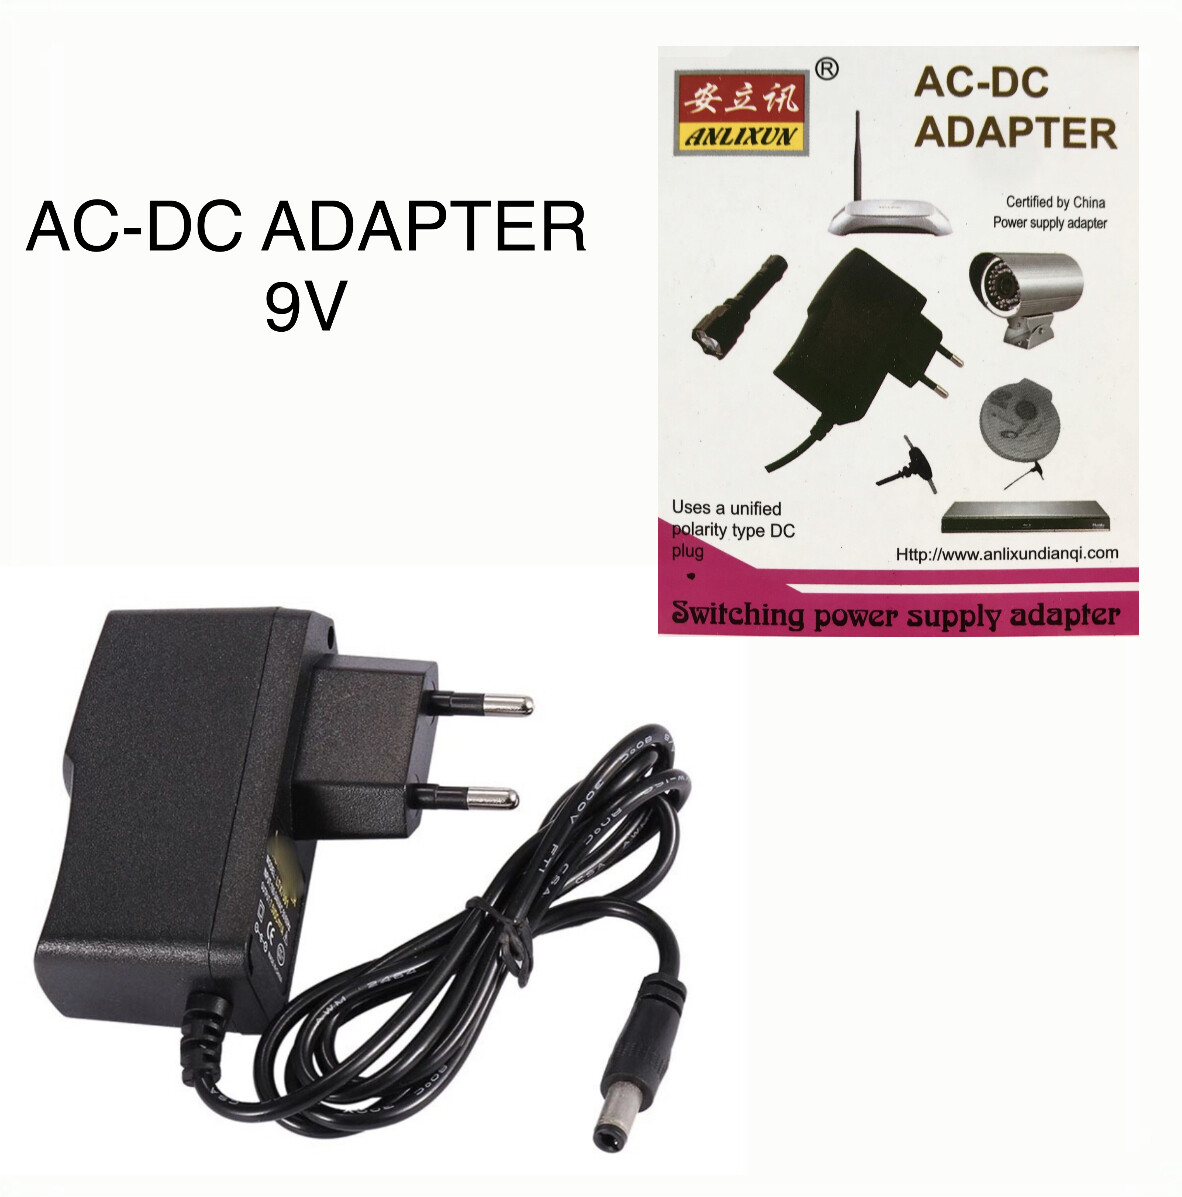 AC-DC Adapter 9V